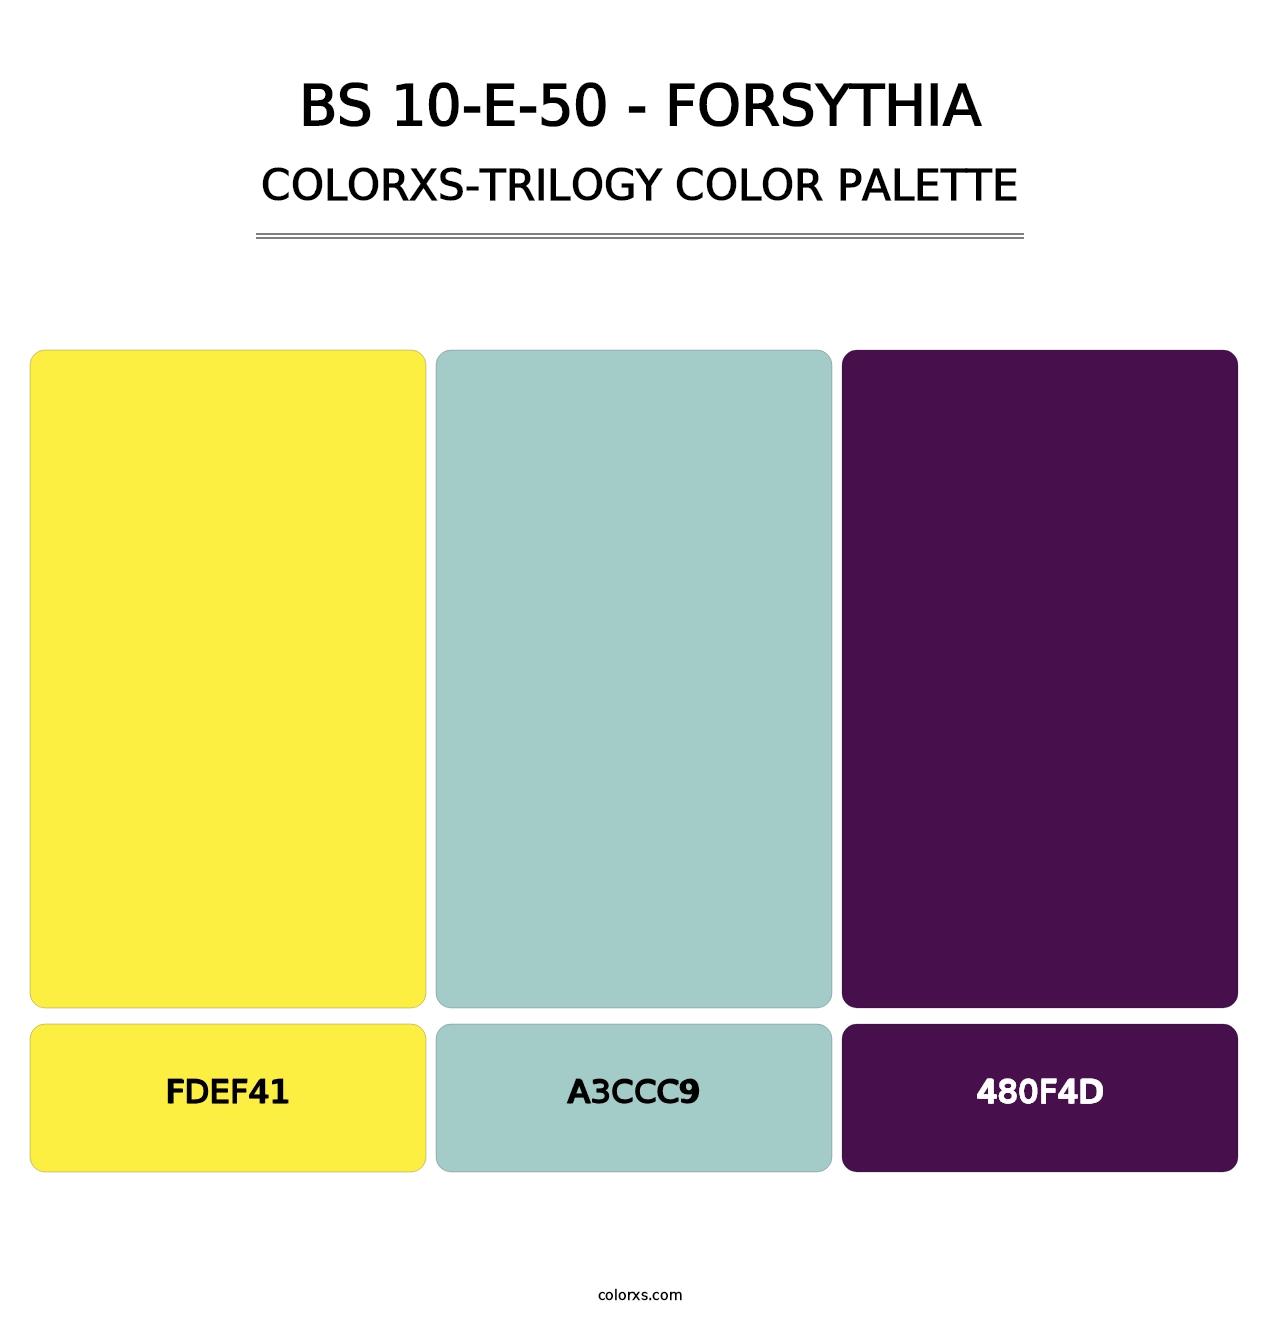 BS 10-E-50 - Forsythia - Colorxs Trilogy Palette